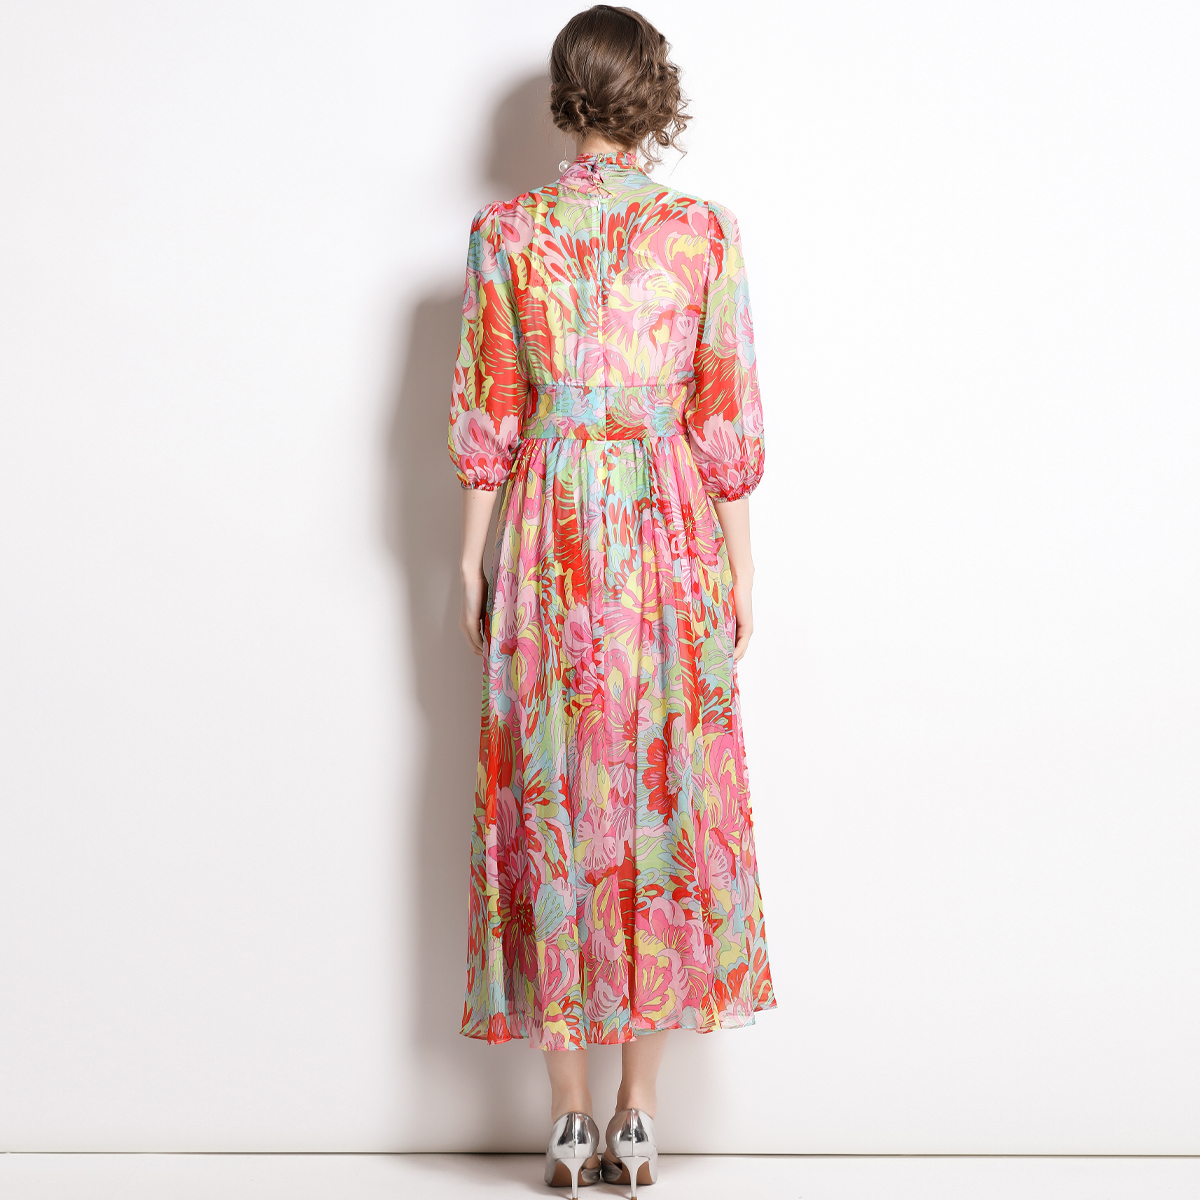 European style printing short sleeve frenum dress for women